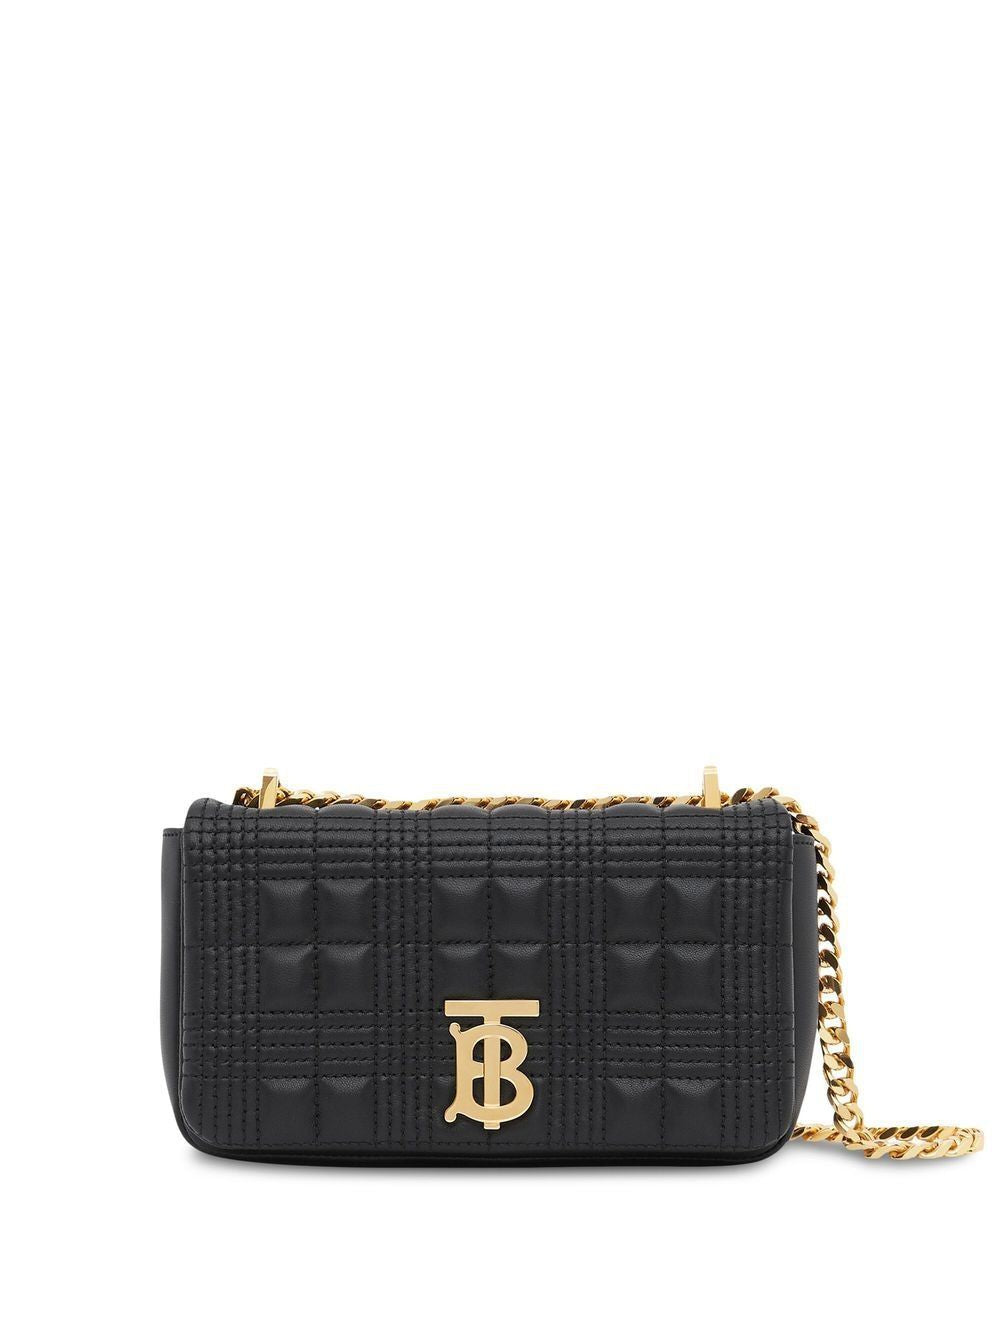 Shop Burberry Black Quilted Leather Mini Shoulder Bag For Women